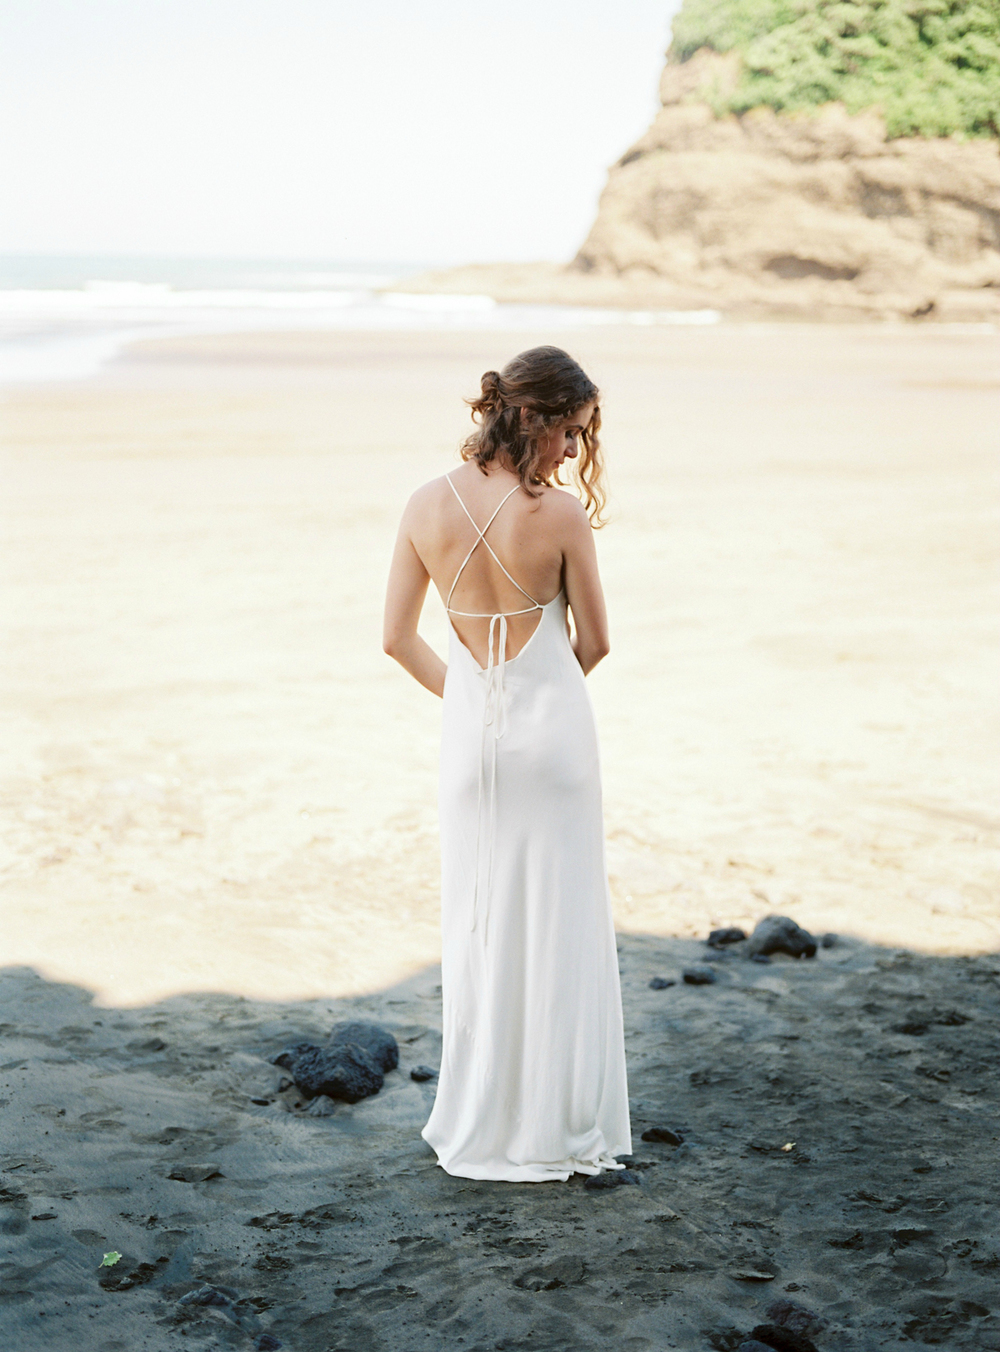 Bare back simple dress for beach wedding